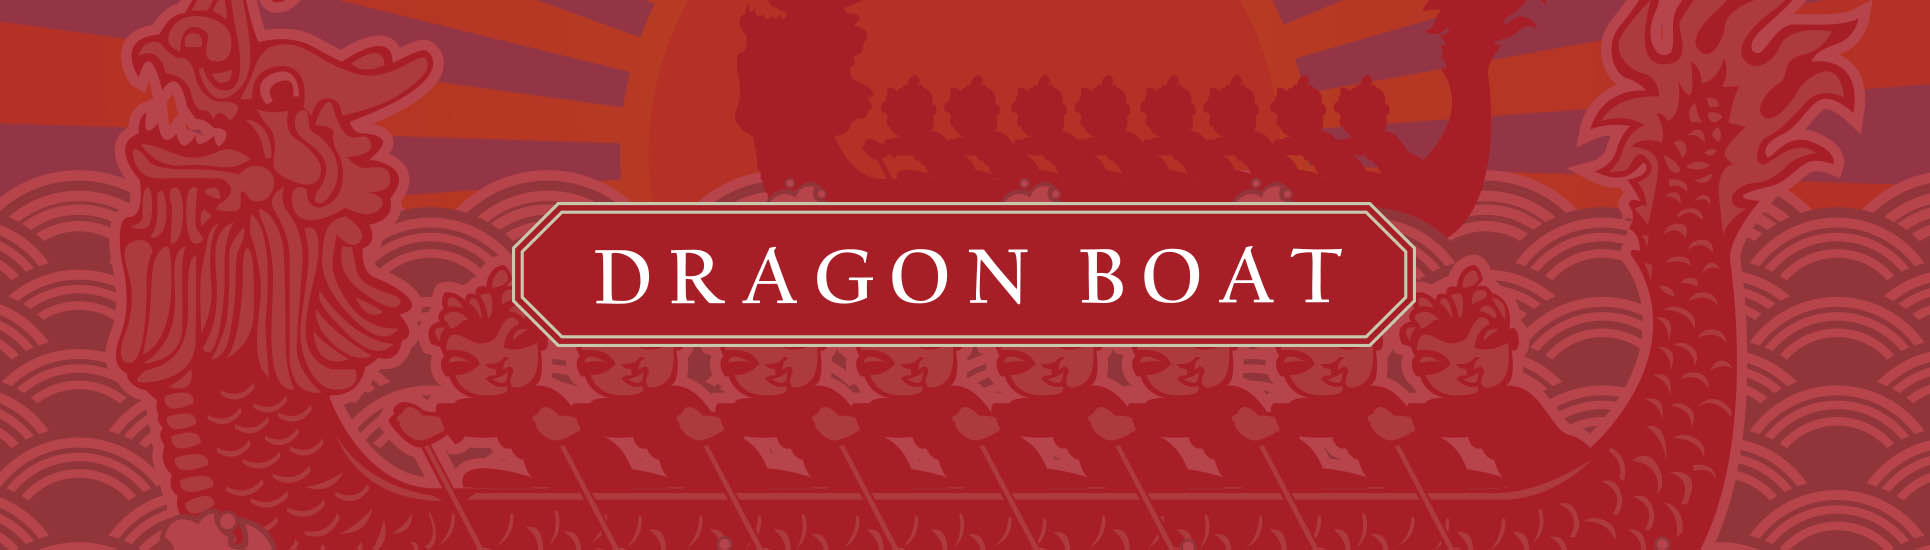 Dragon Boat Classic